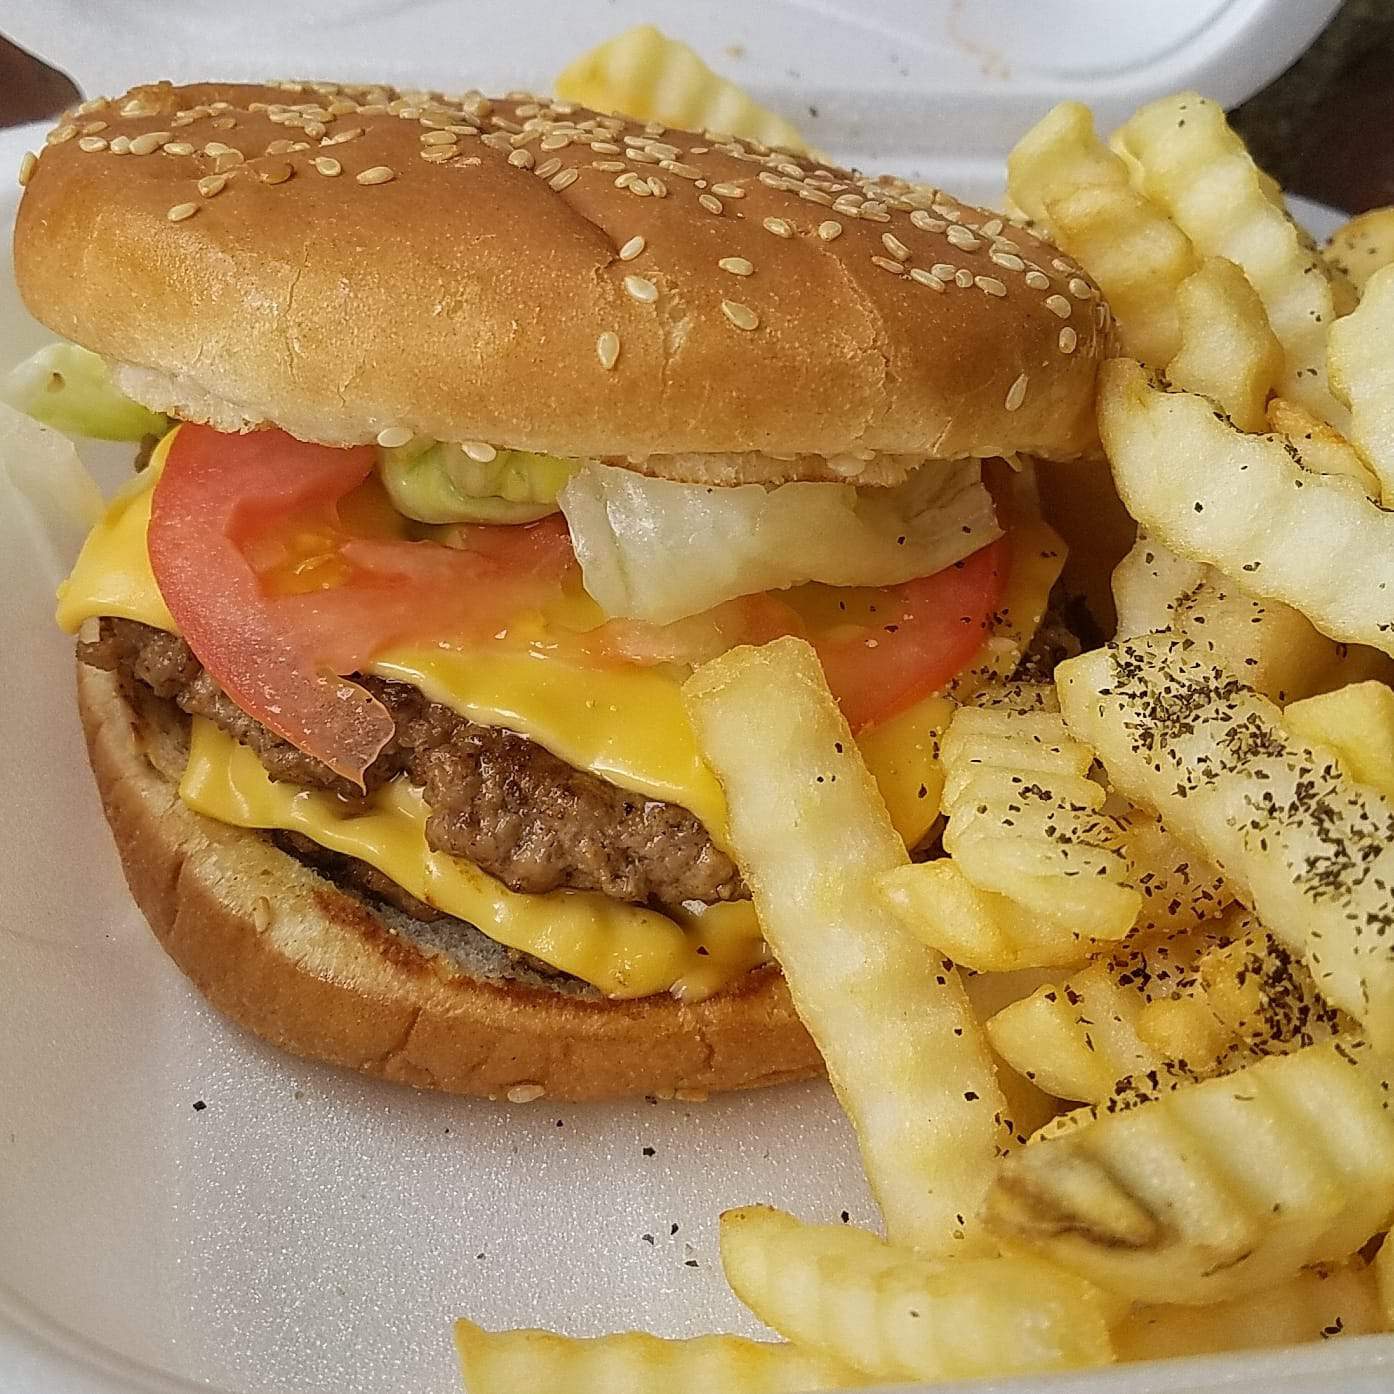 Jacksonville’s best burger: The Avenue Grill